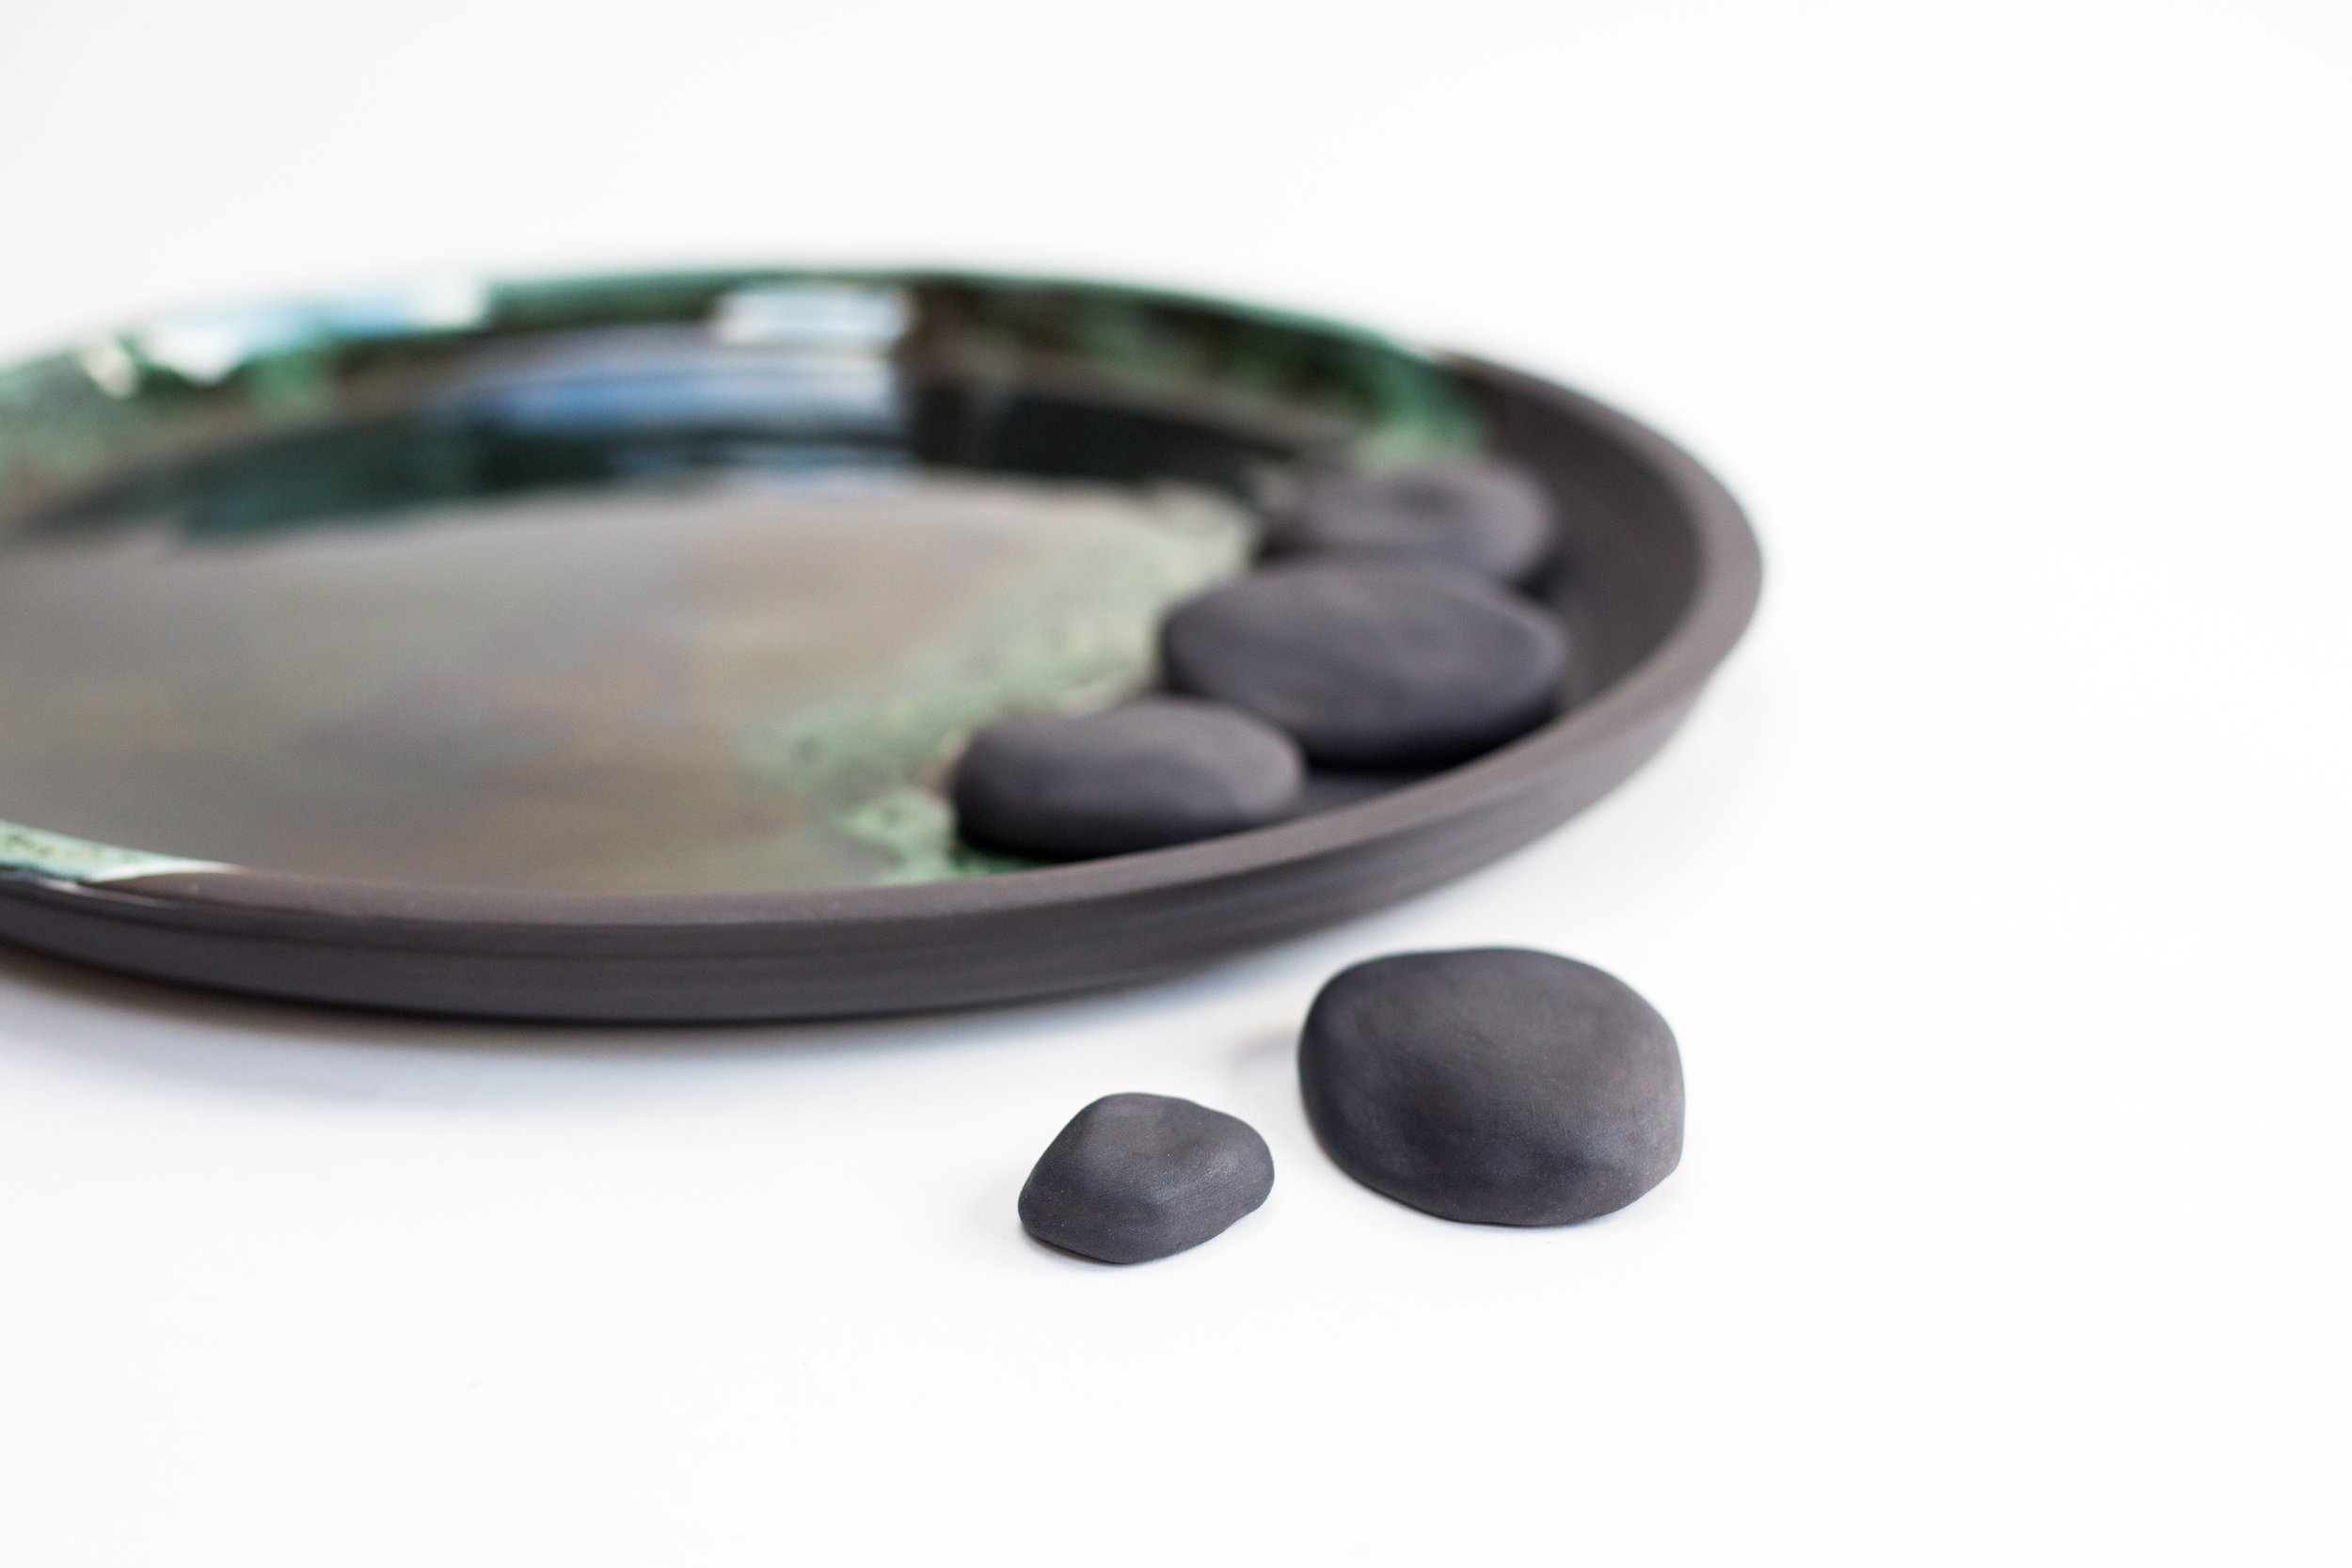 KA Ceramics Shoreline pebble dish 37cm x 3cm profile view.jpg